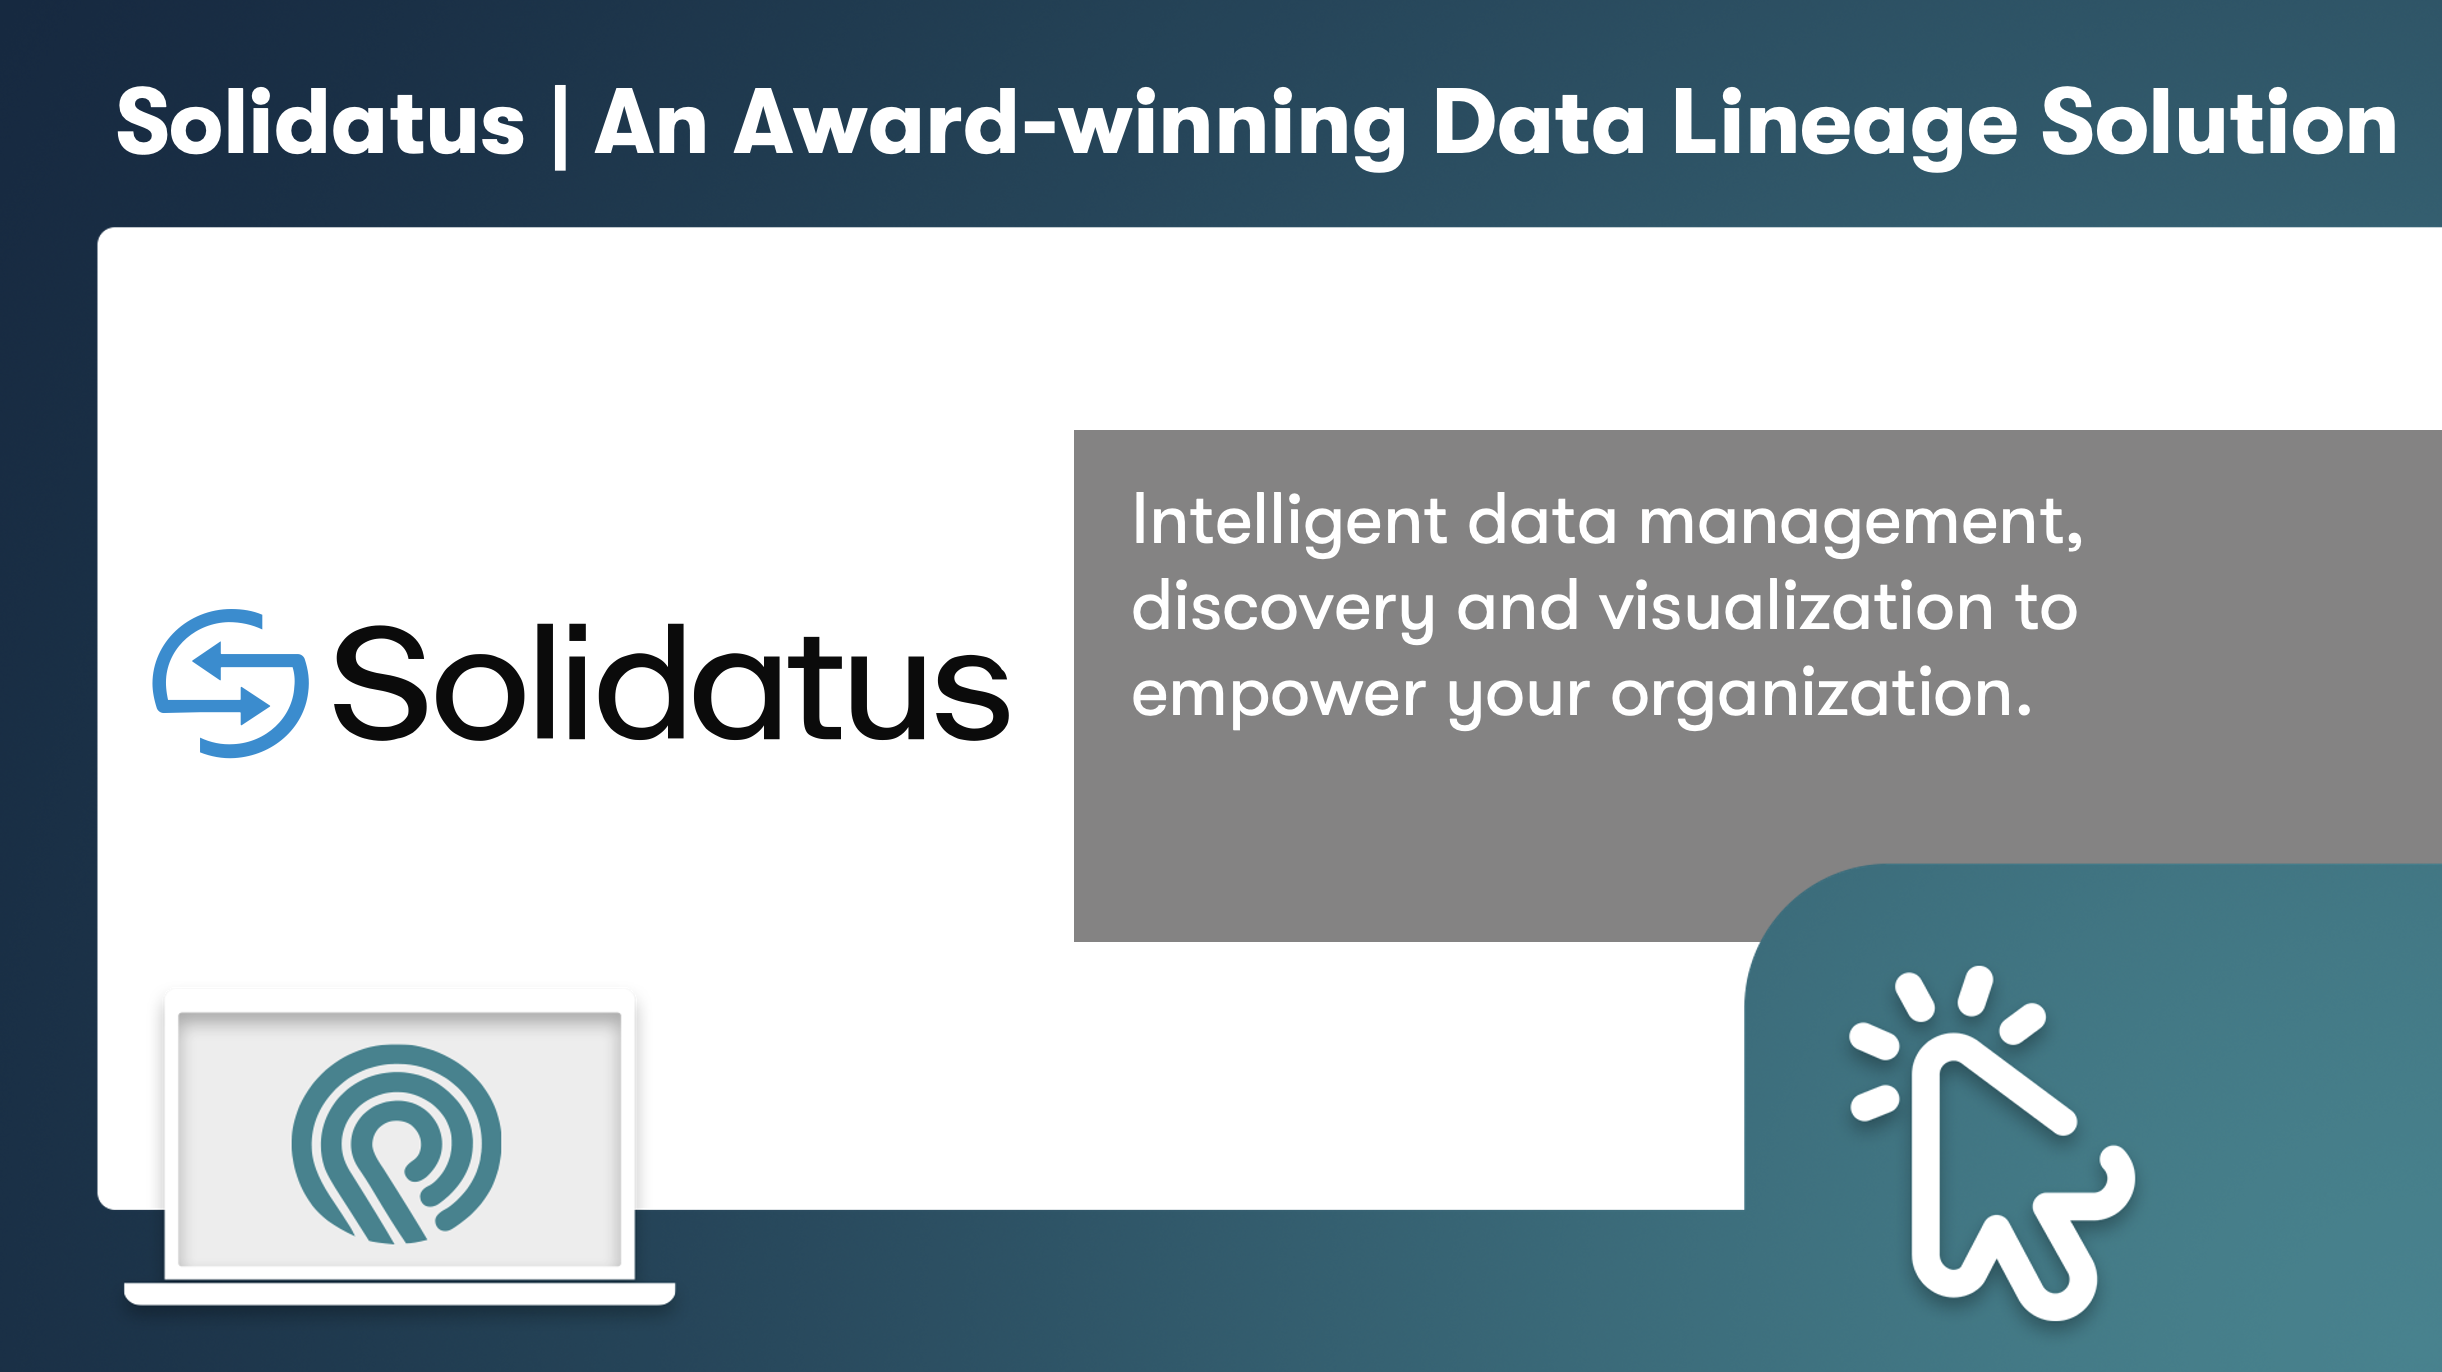 Solidatus | An Award-winning Data Lineage Solution